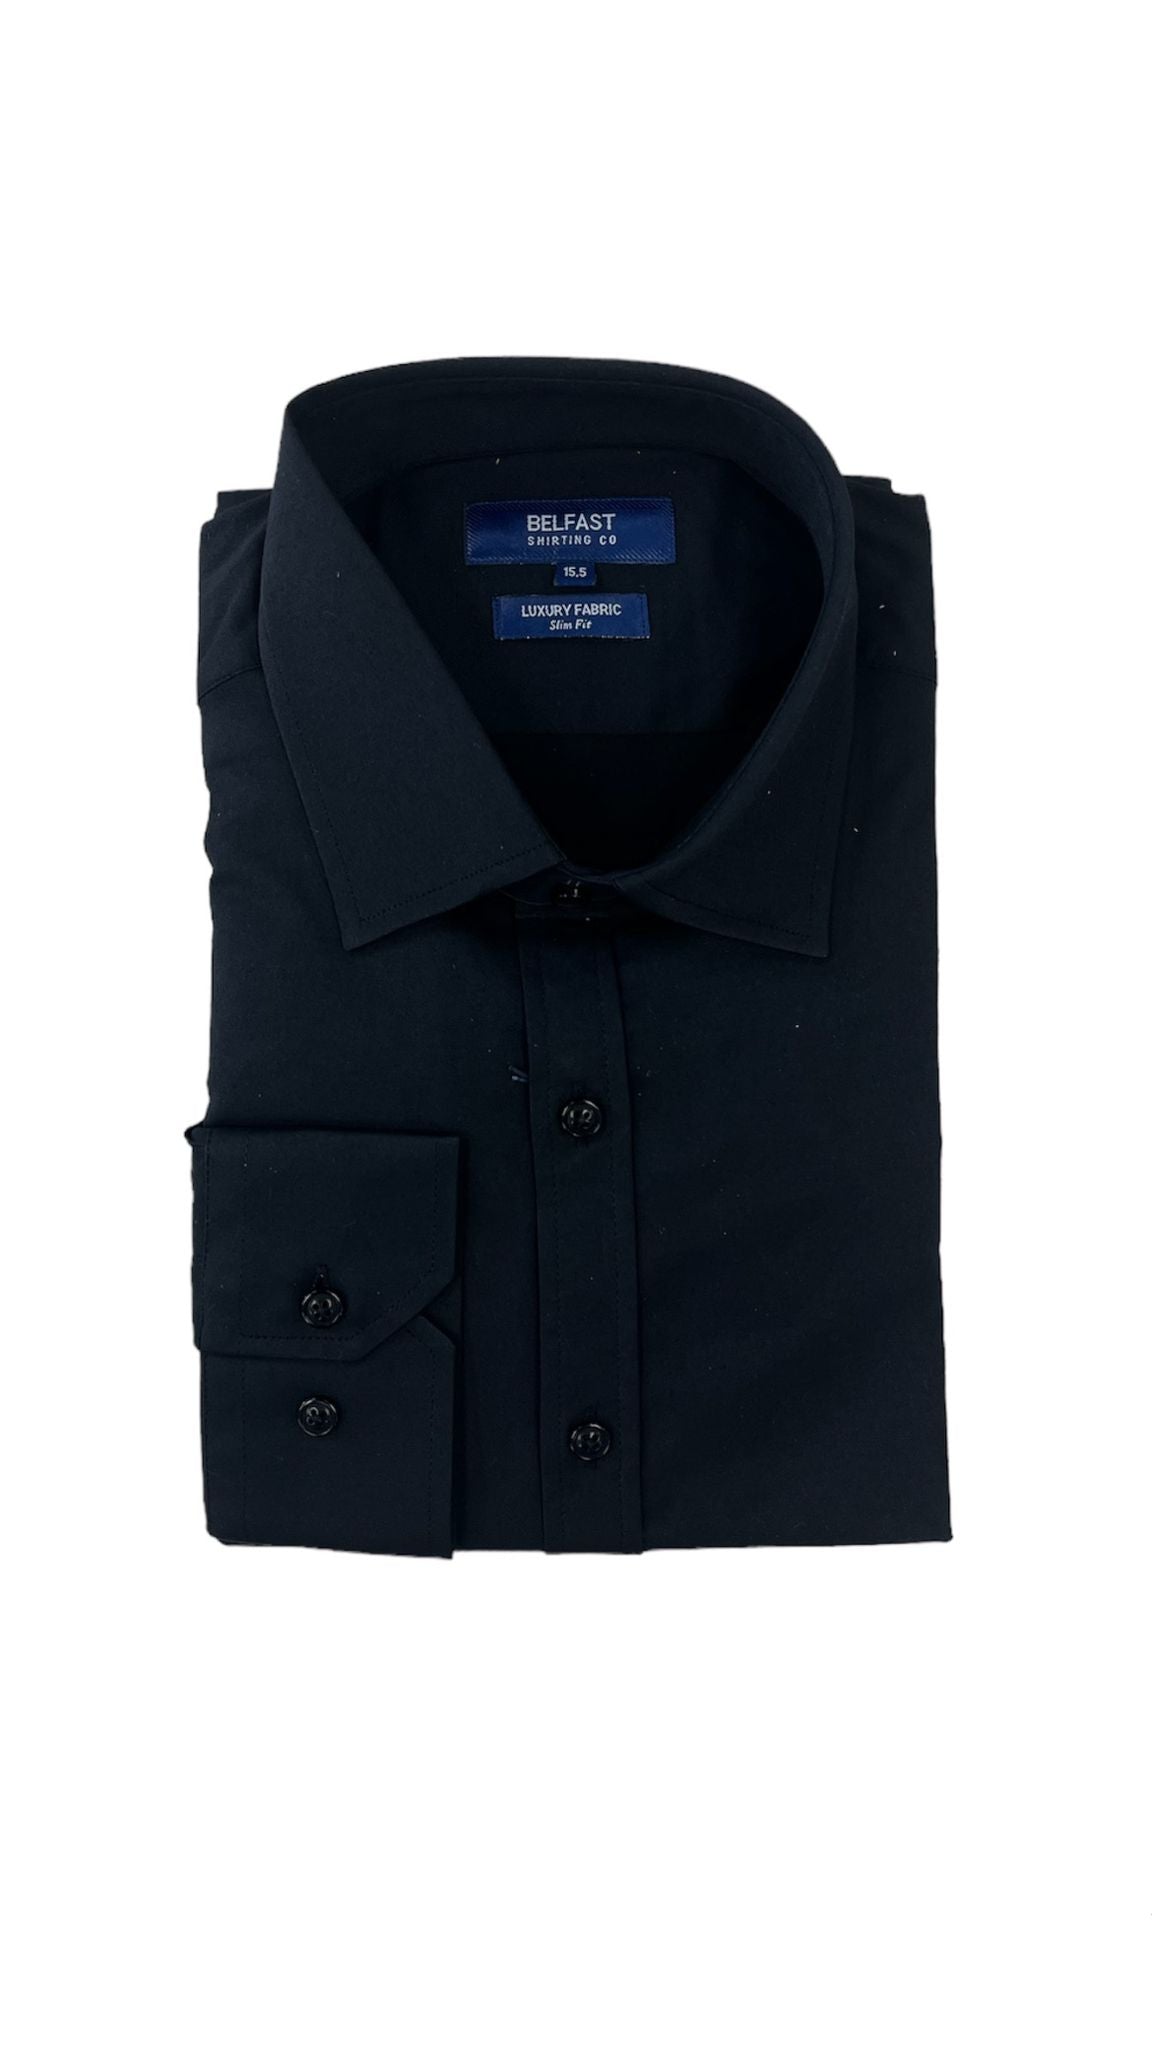 Belfast Mens Classic Fit Solid Black Cotton Blend Spread Collar Dress Shirt